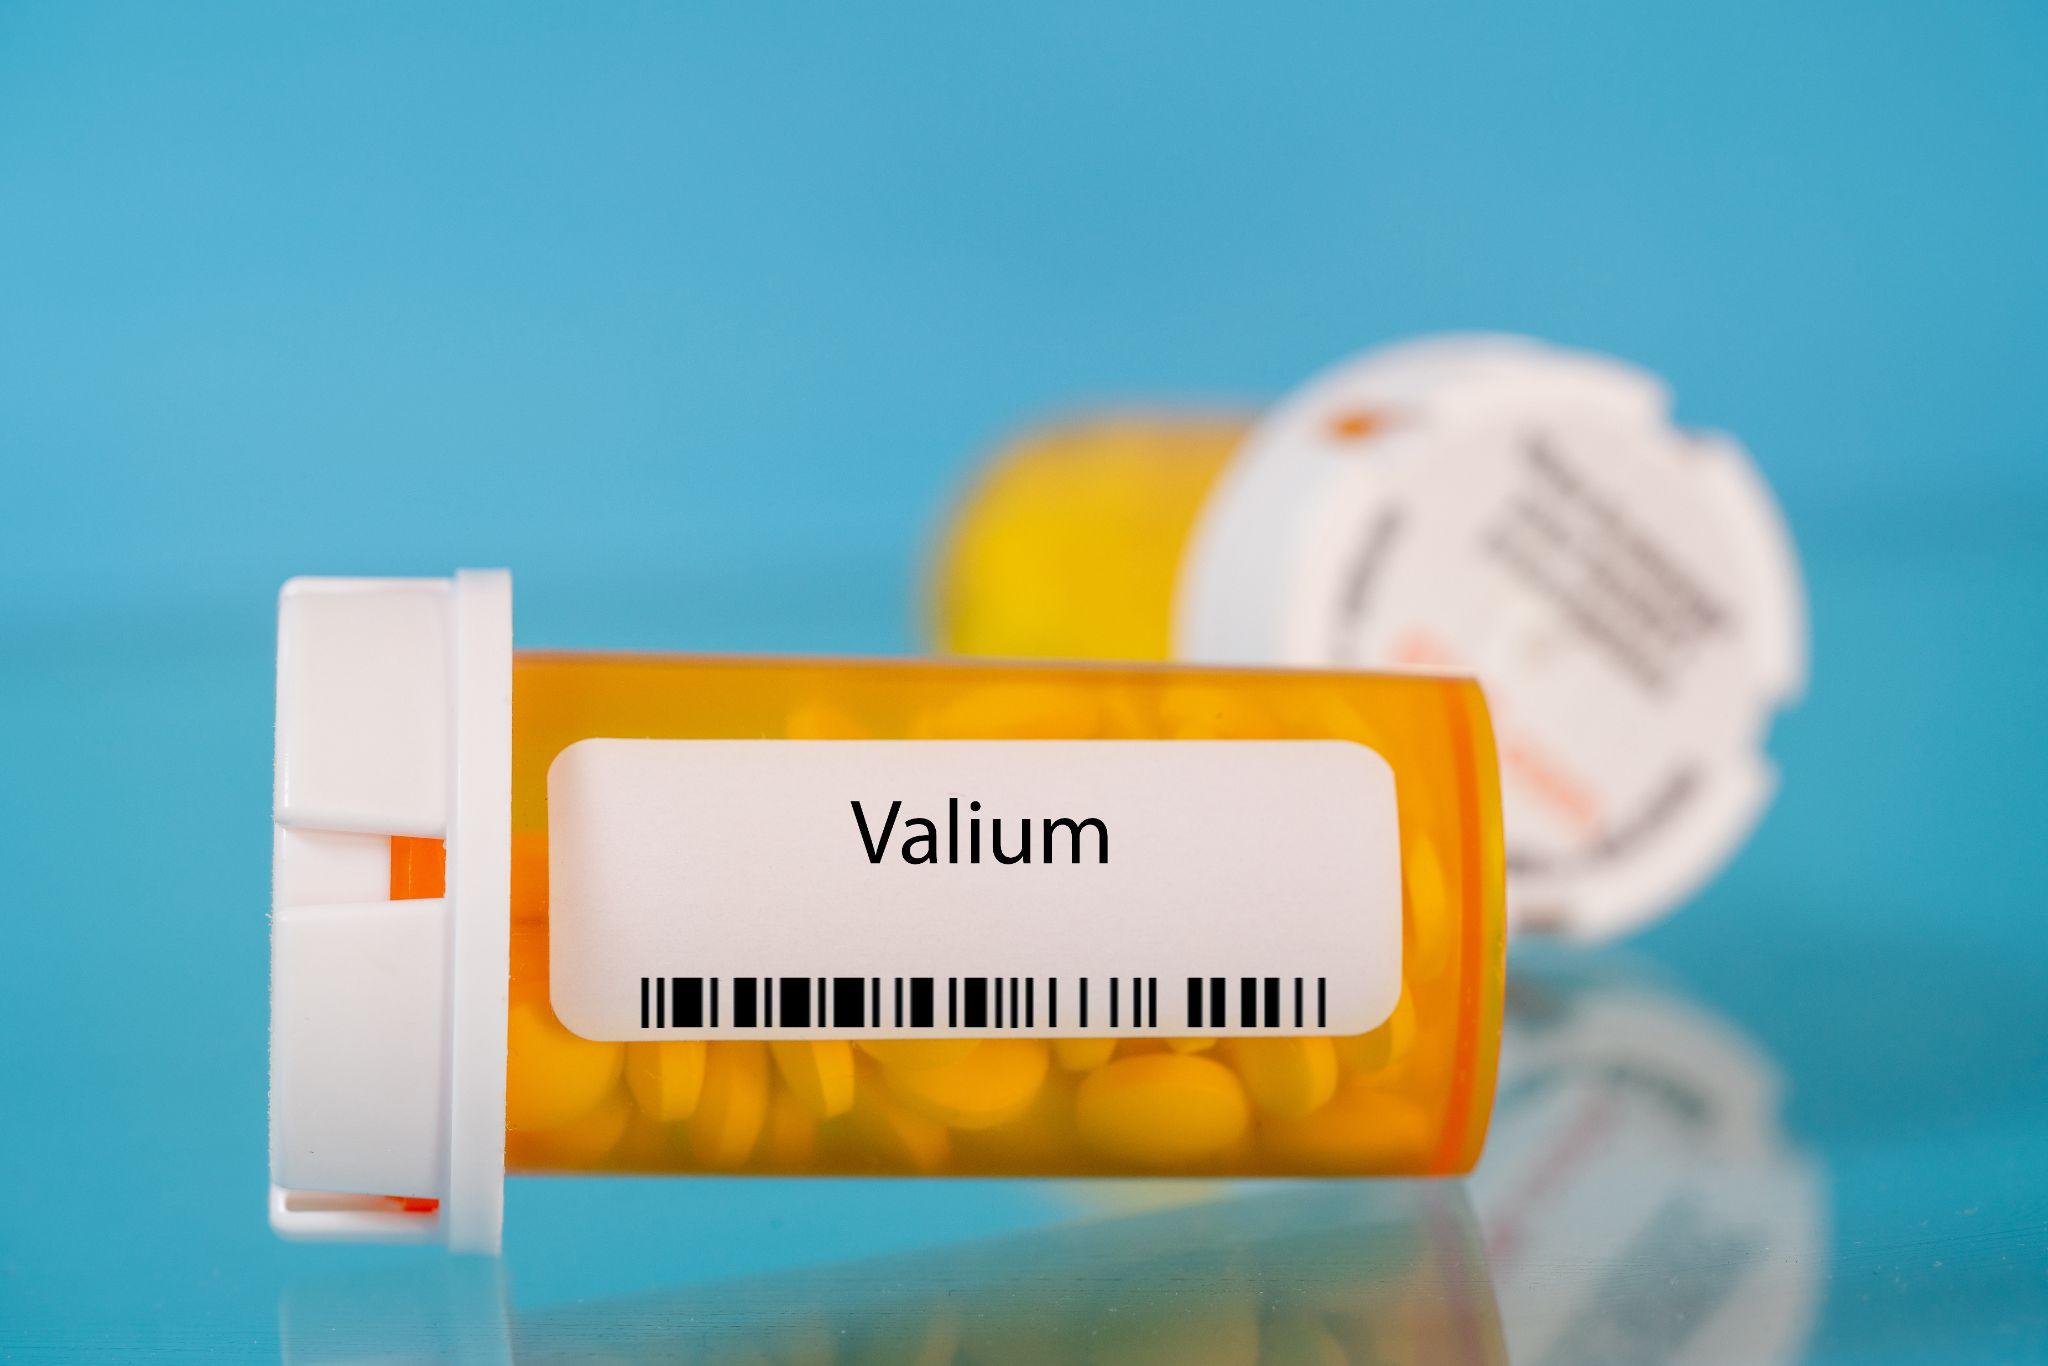 Valium pills in RX prescription drug bottle